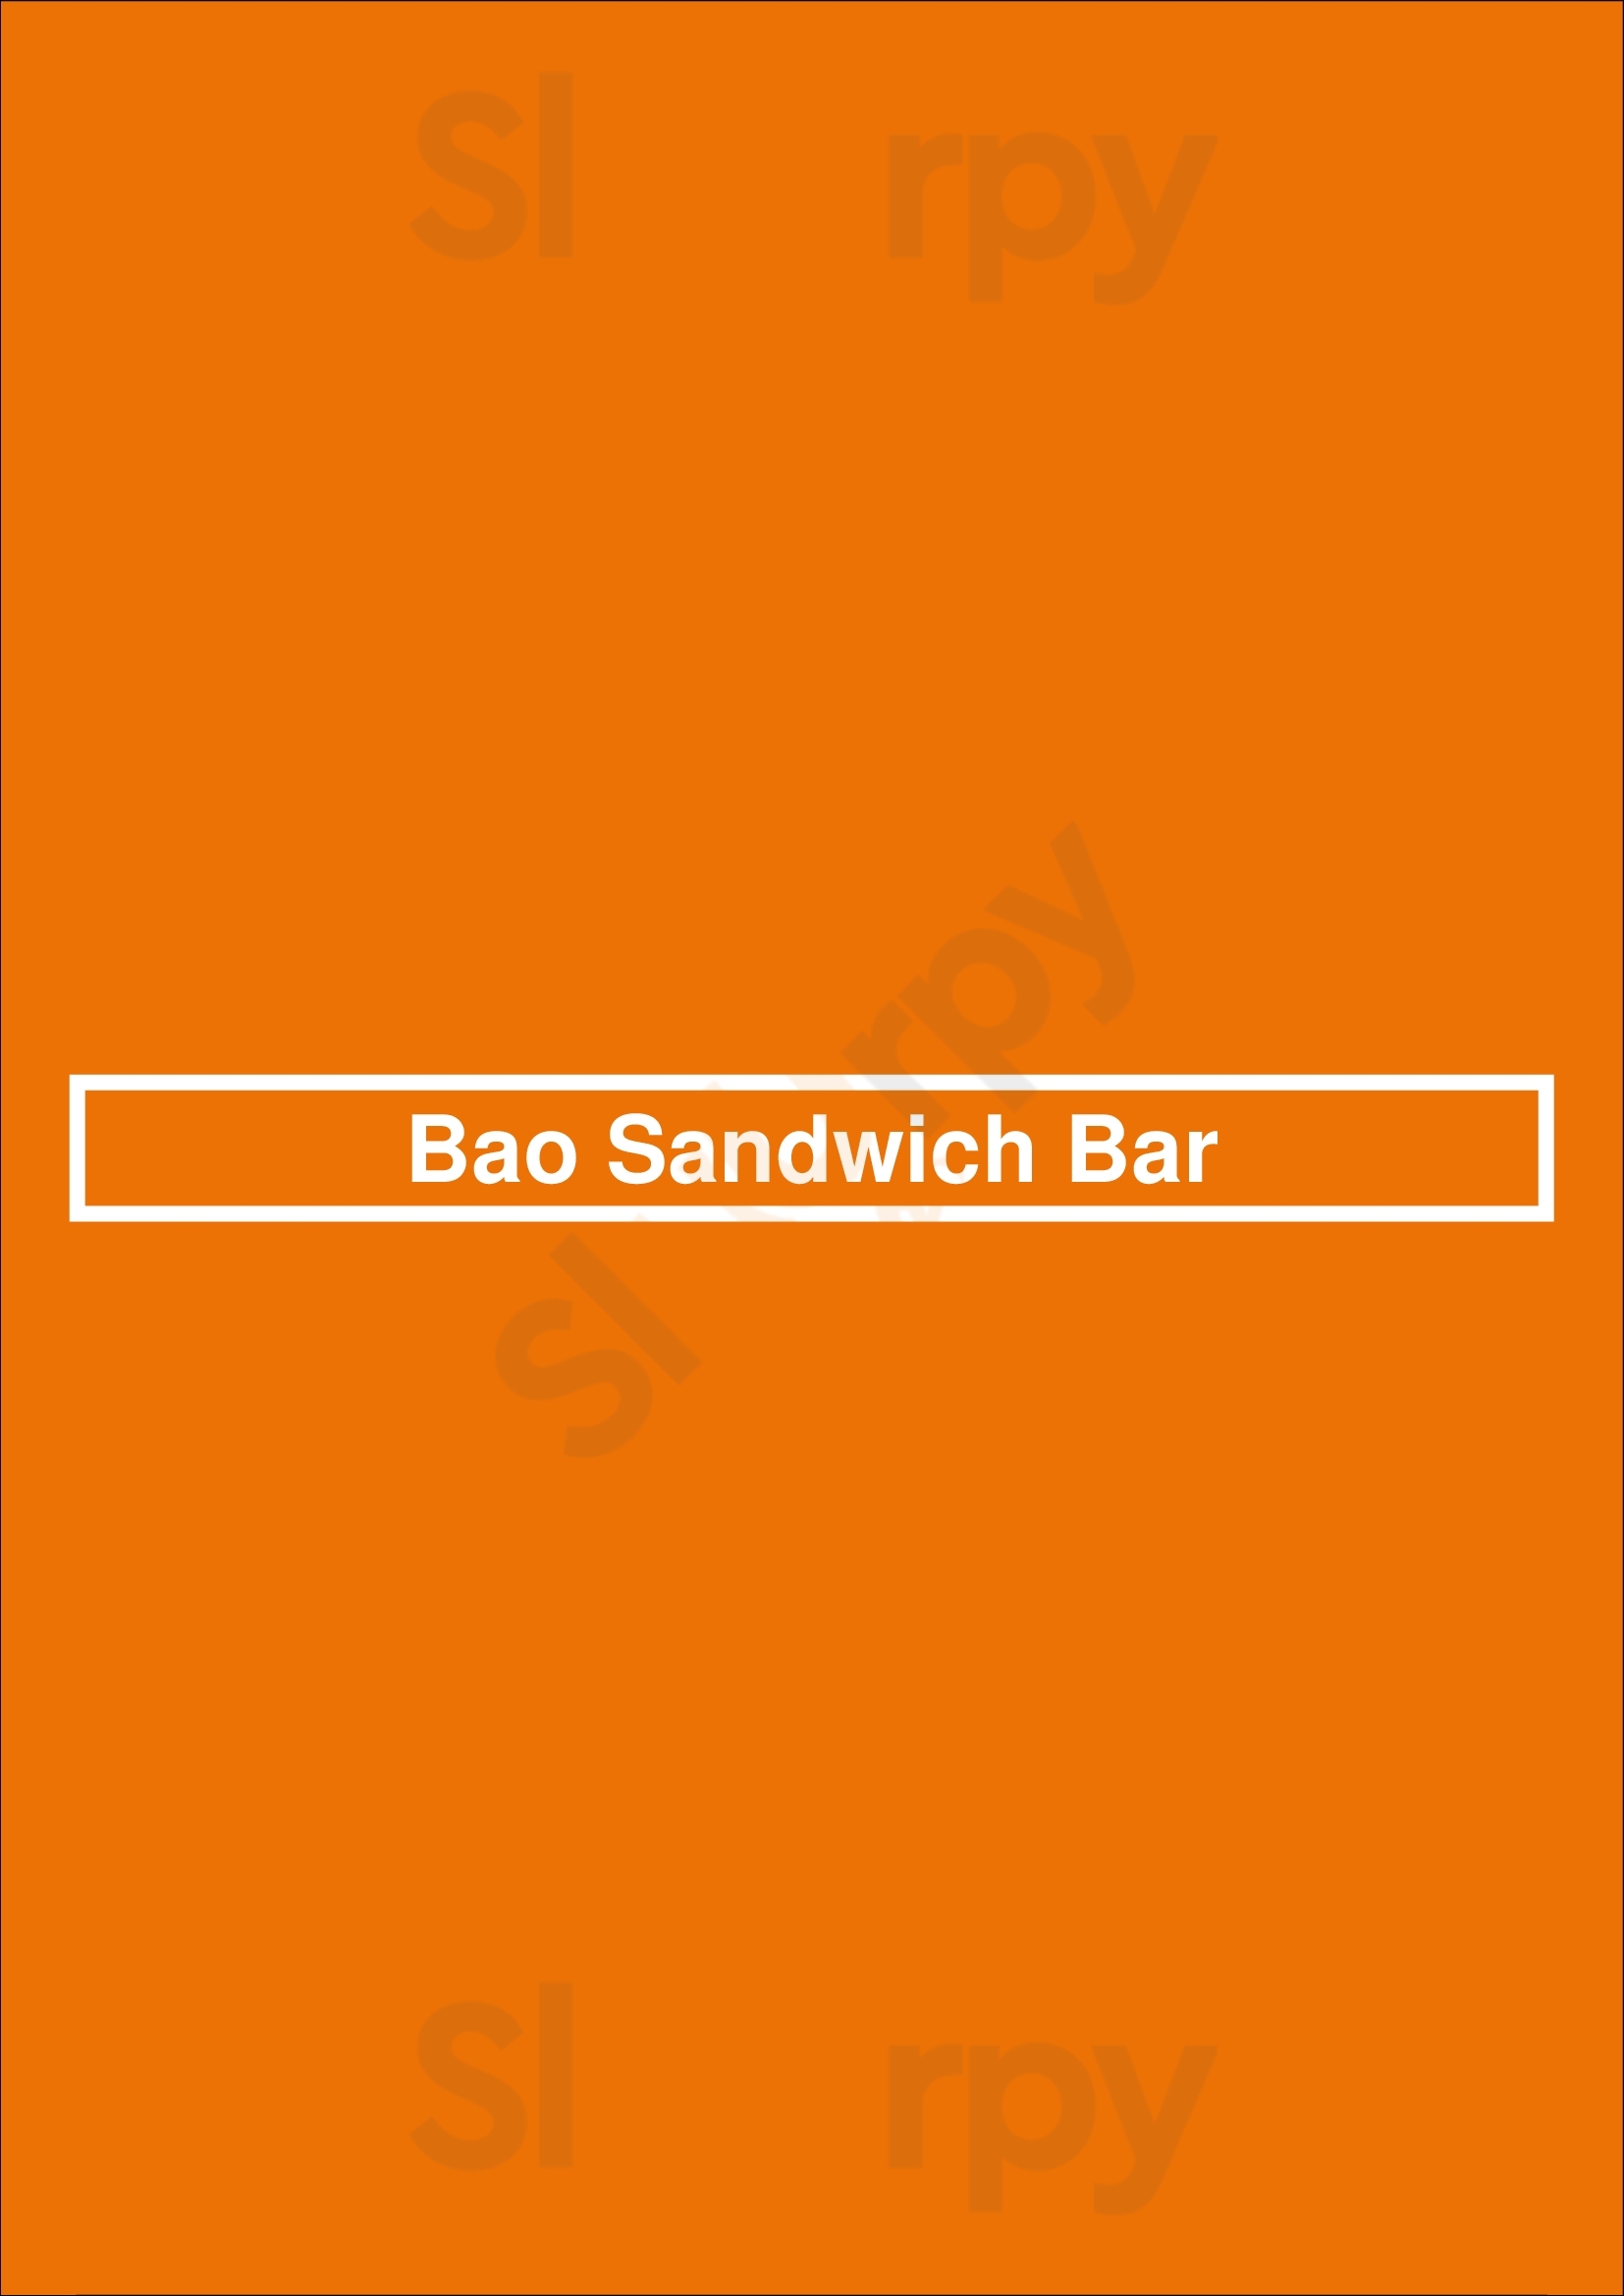 Bao Sandwich Bar Waterloo Menu - 1